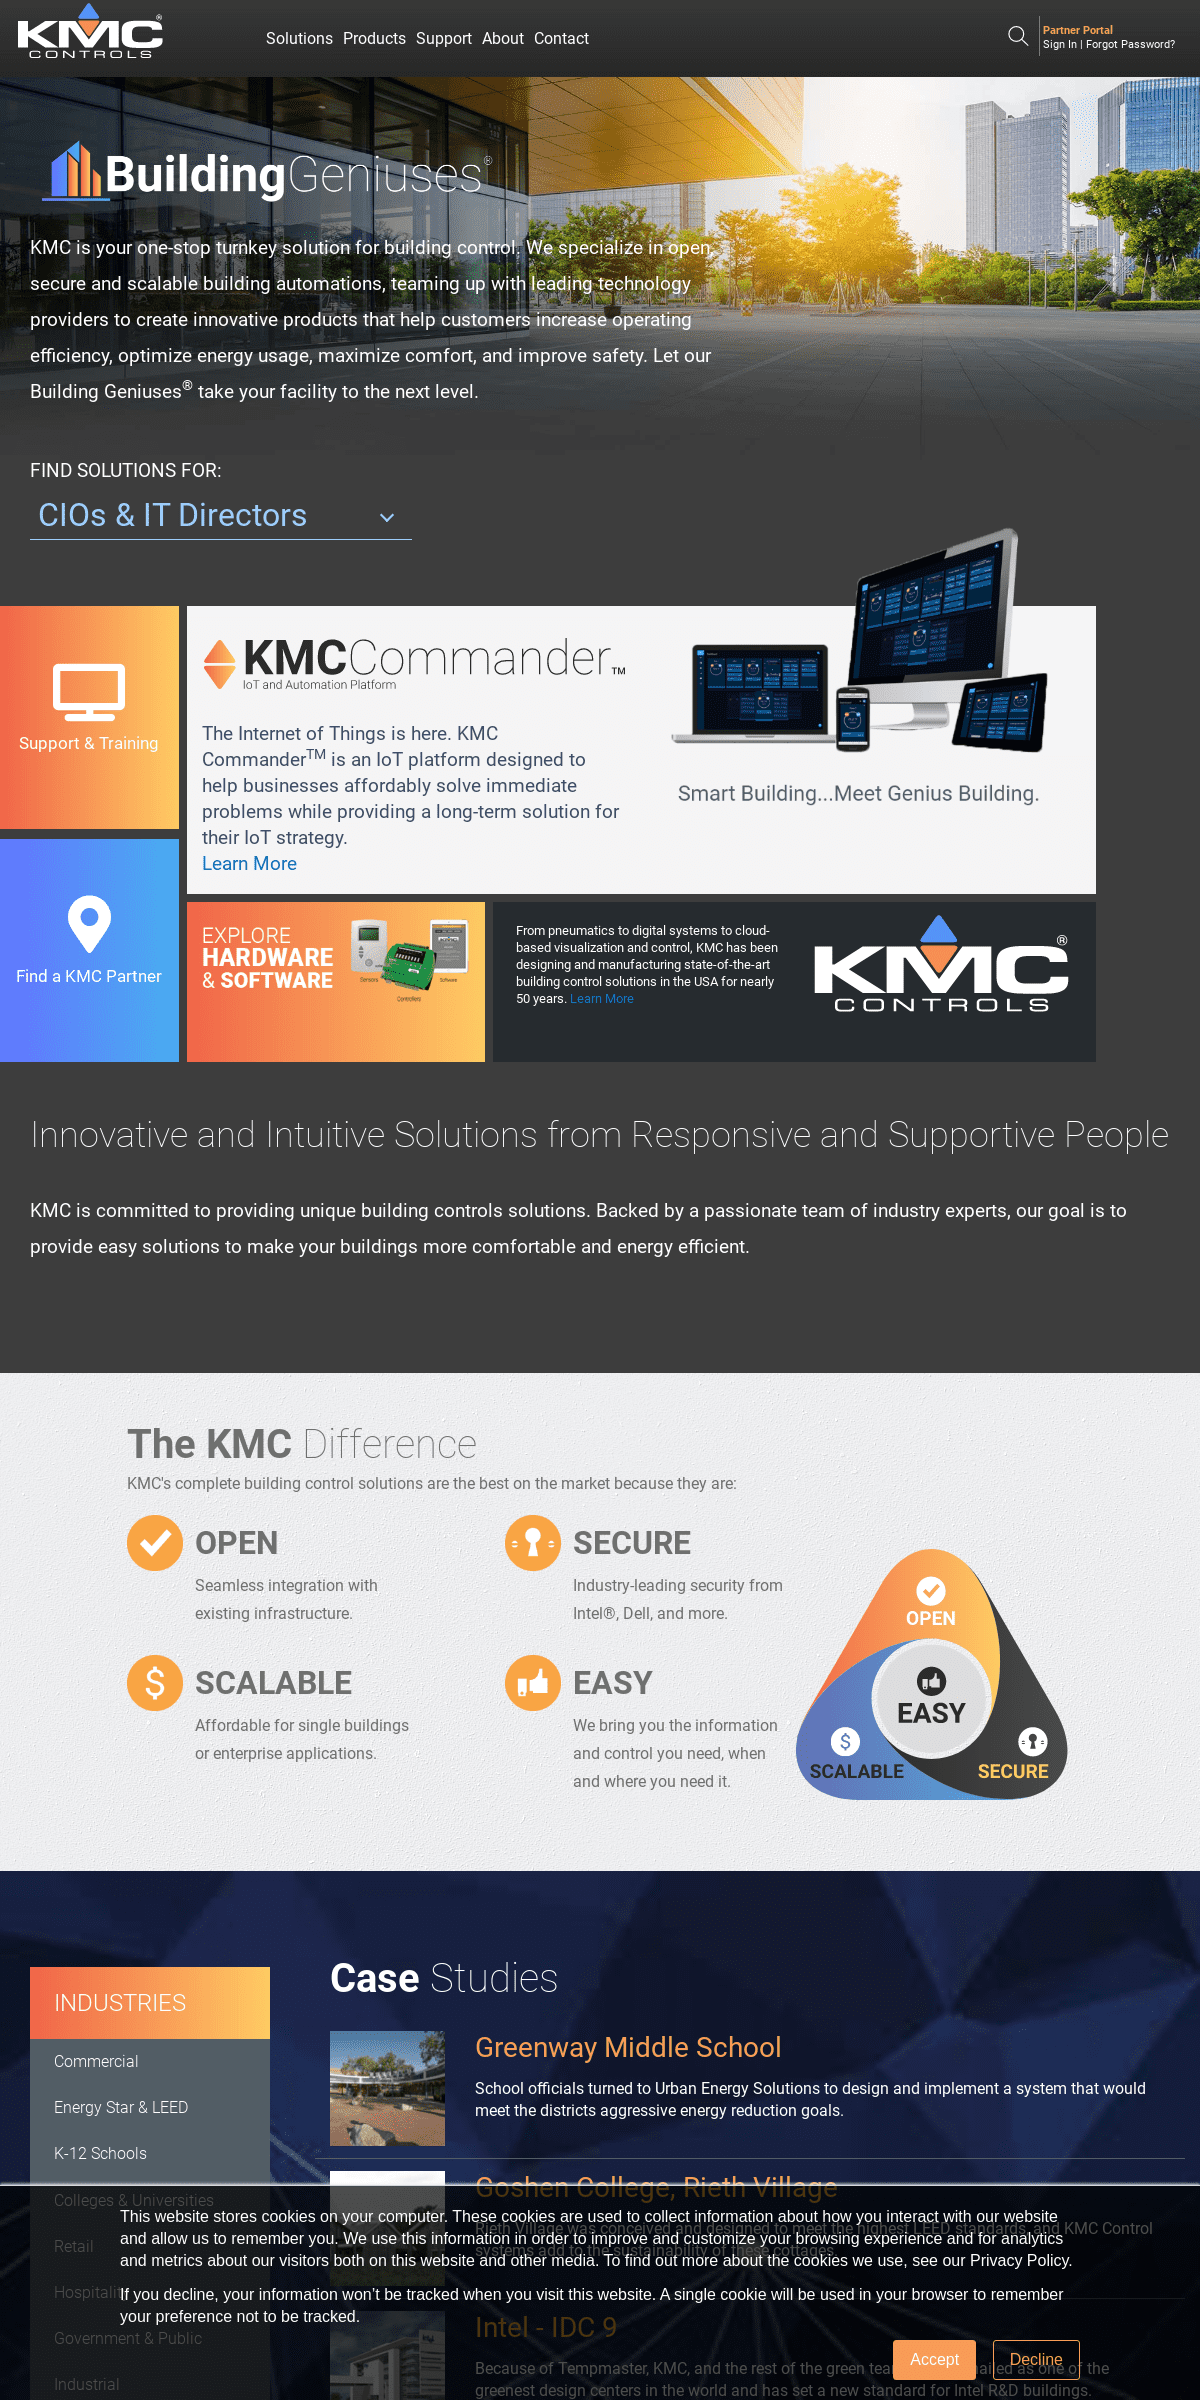 A complete backup of kmccontrols.com